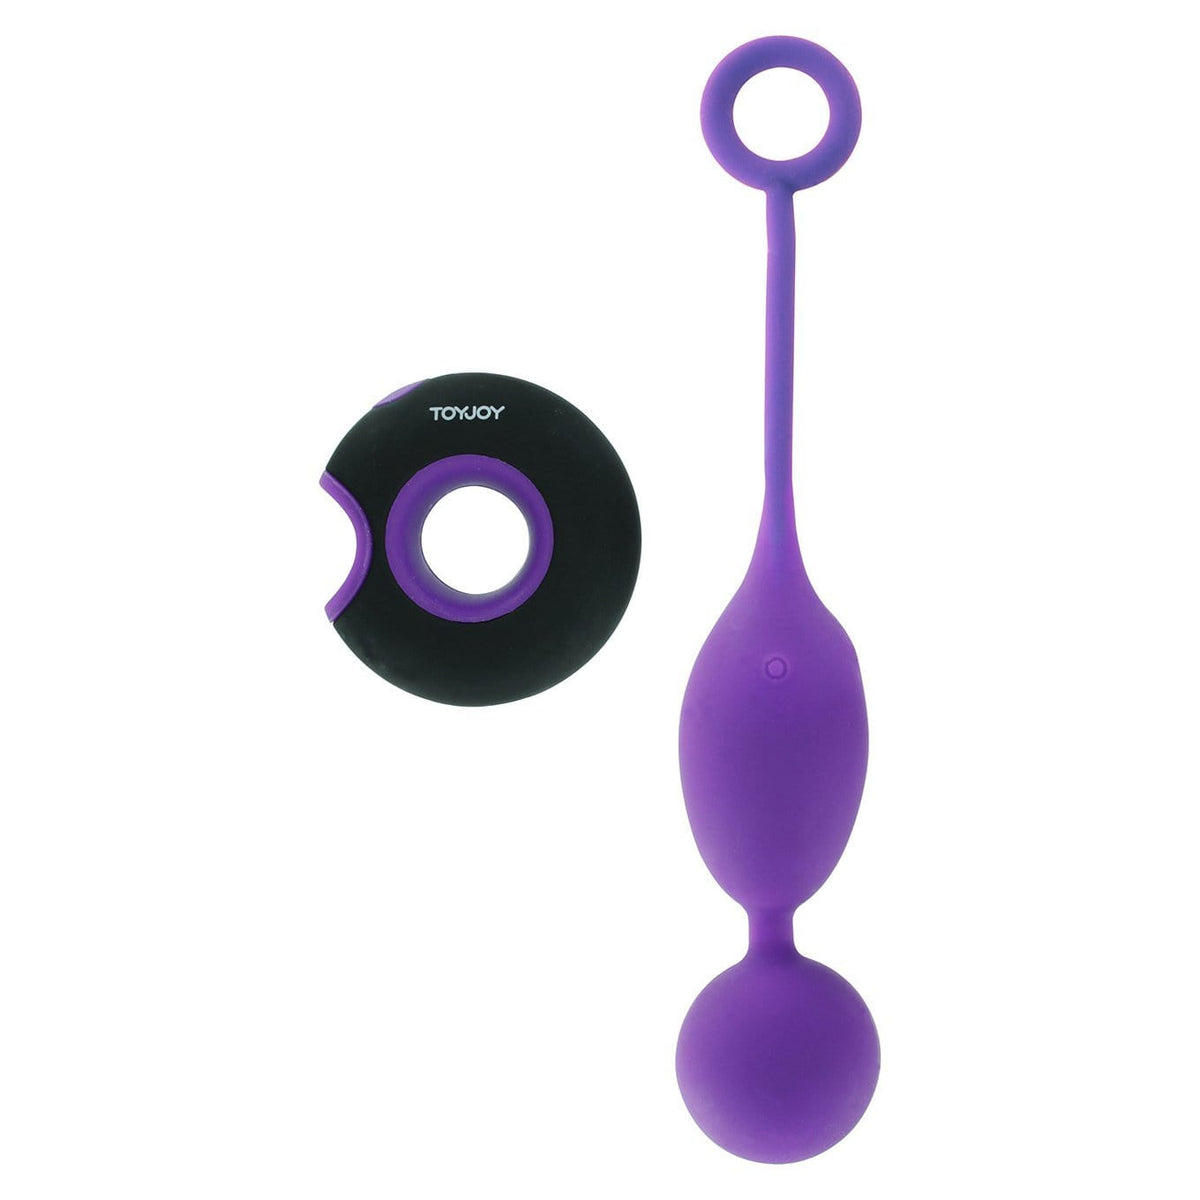 ToyJoy - Caresse Embrace ll Remote Control Kegel Balls (Purple) TJ1045 CherryAffairs